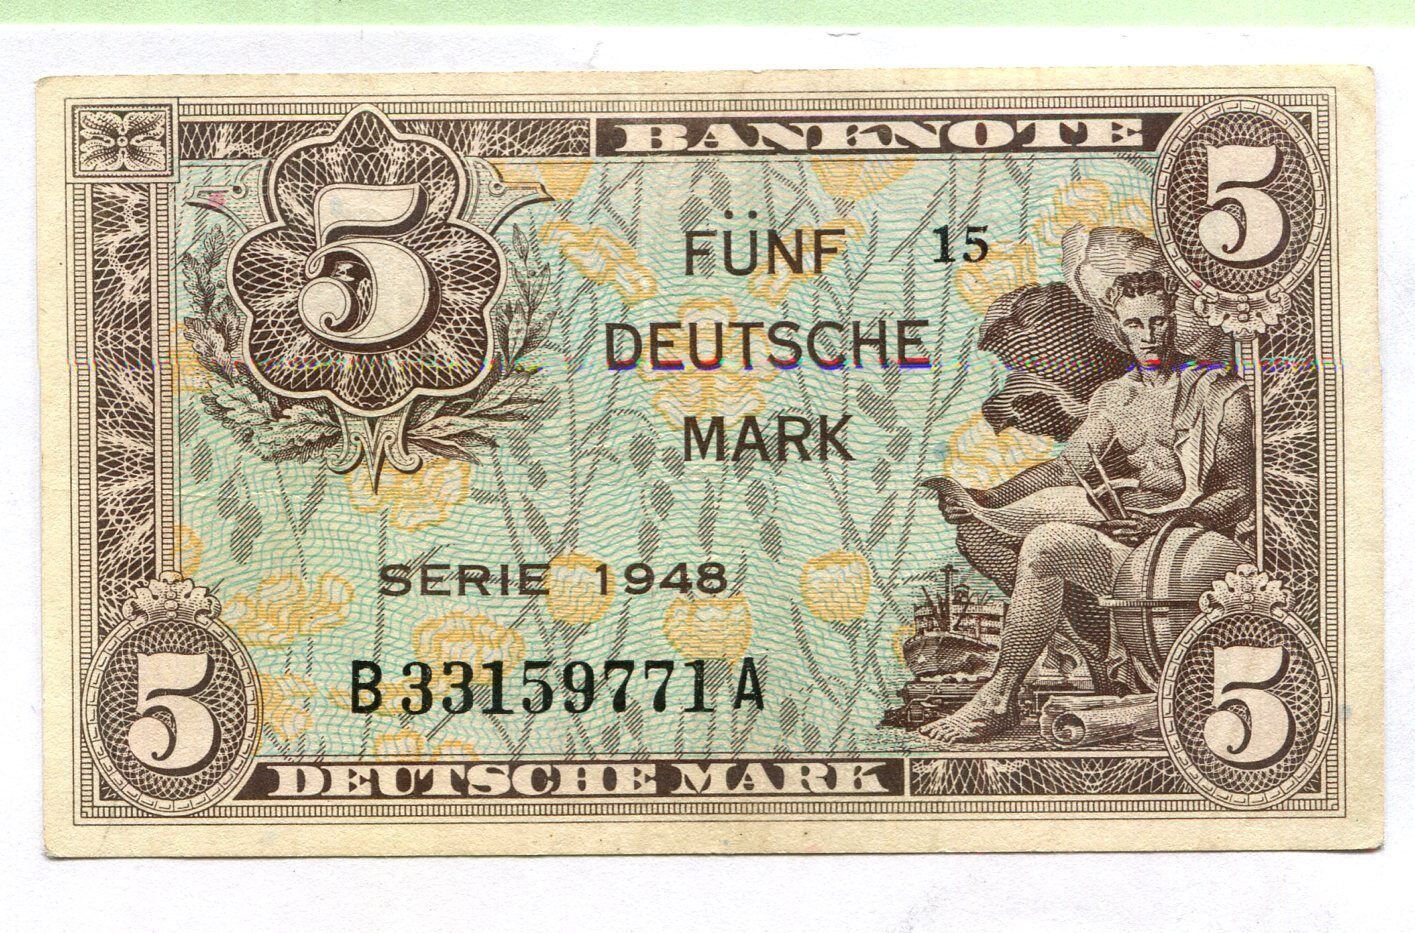 Купюра марка. Немецкая марка. Немецкая марка 1948. Немецкая марка банкноты. Немецкая марка (Deutsche Mark).